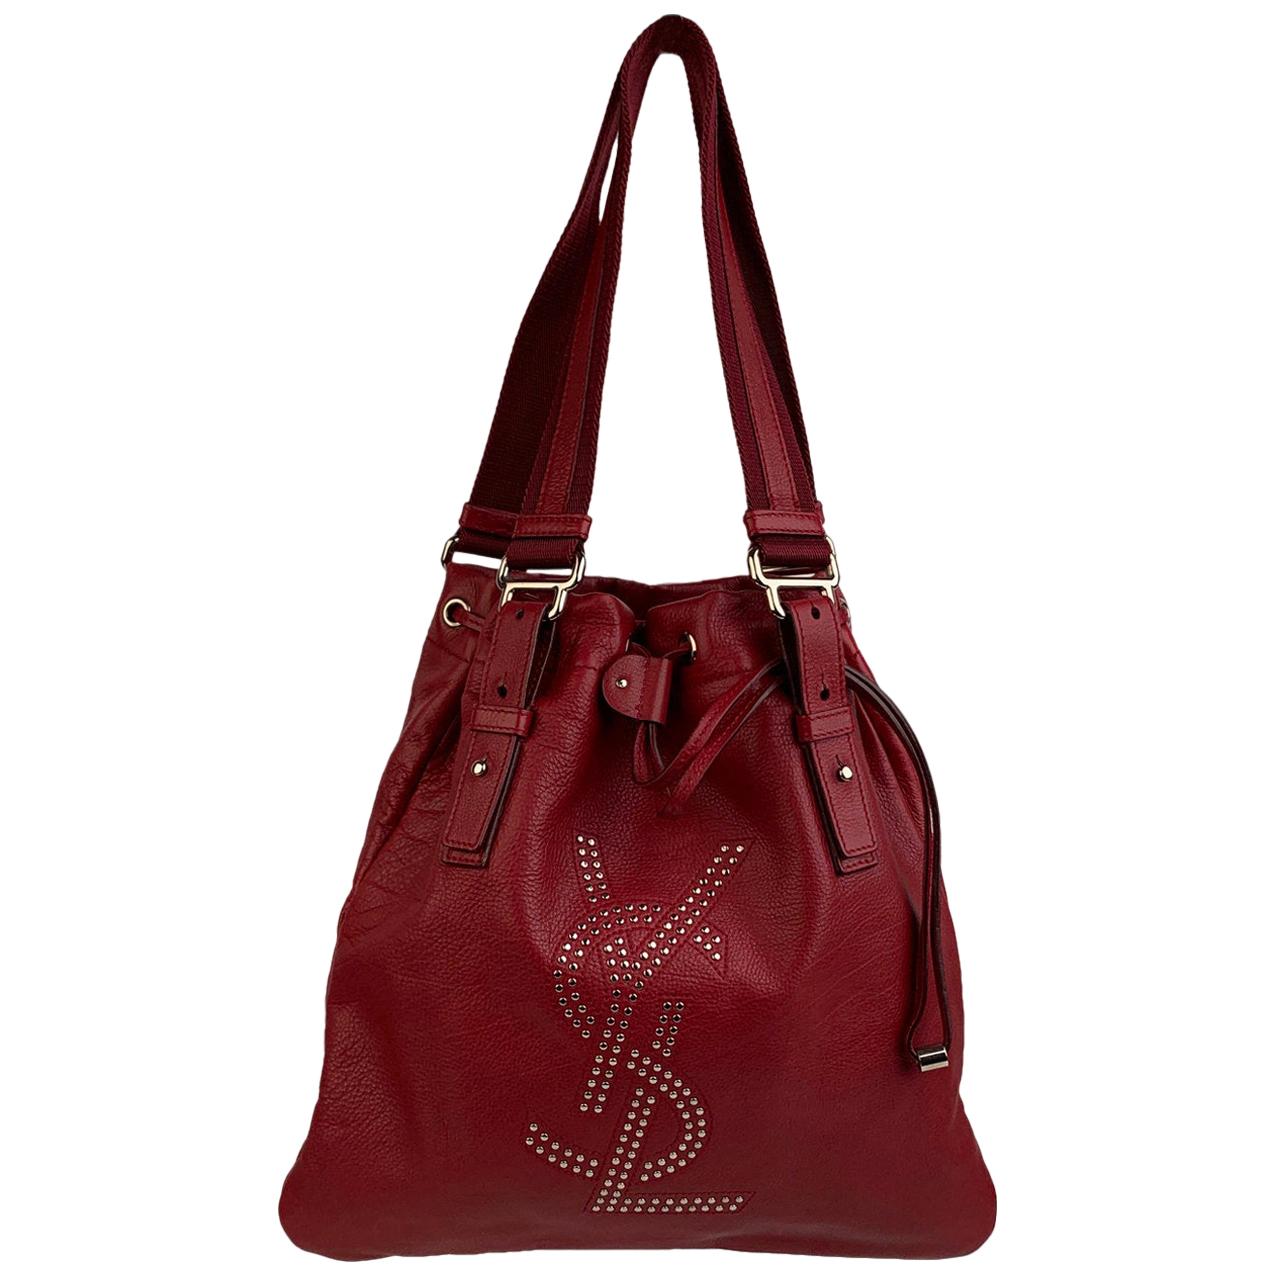 Yves Saint Laurent Red Leather Small Kahala Sac Tote Bag